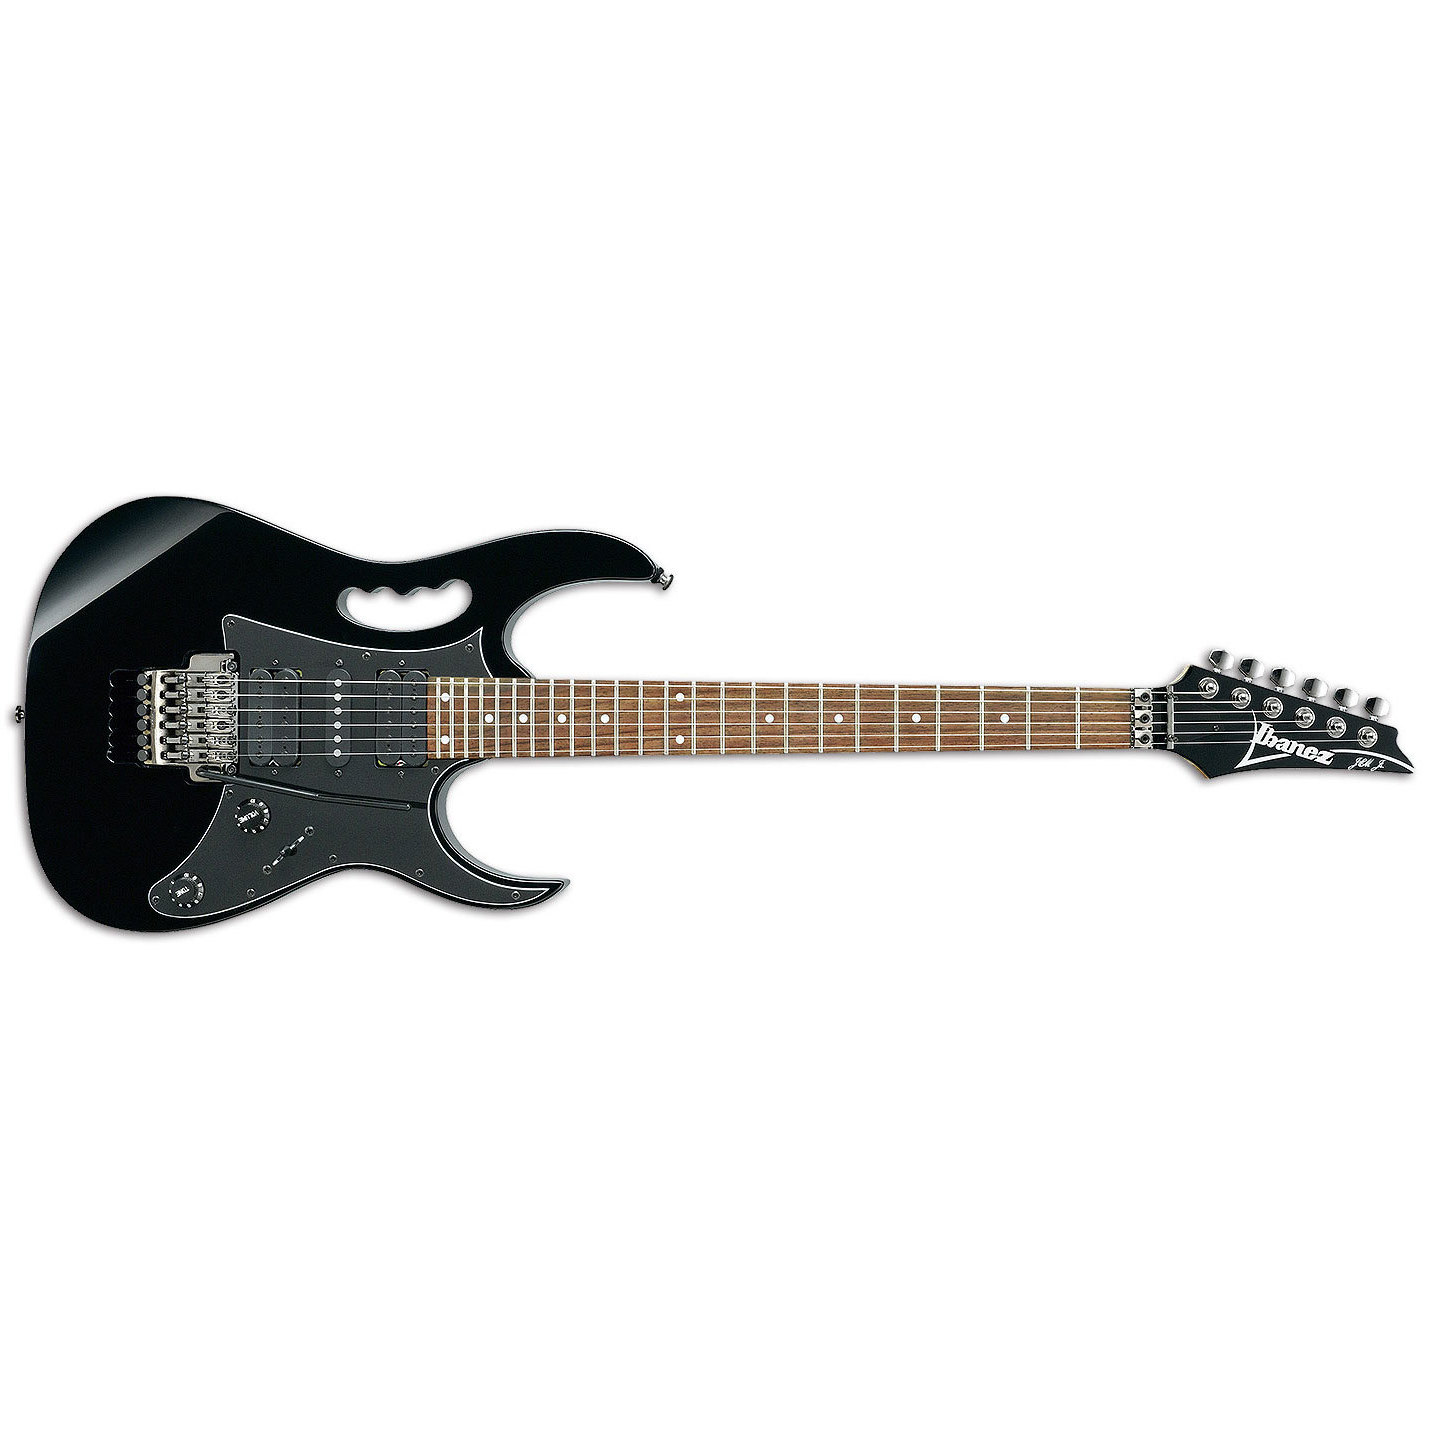 Ibanez Steve Vai Signature Jem Jr Electric Guitar Review 2023